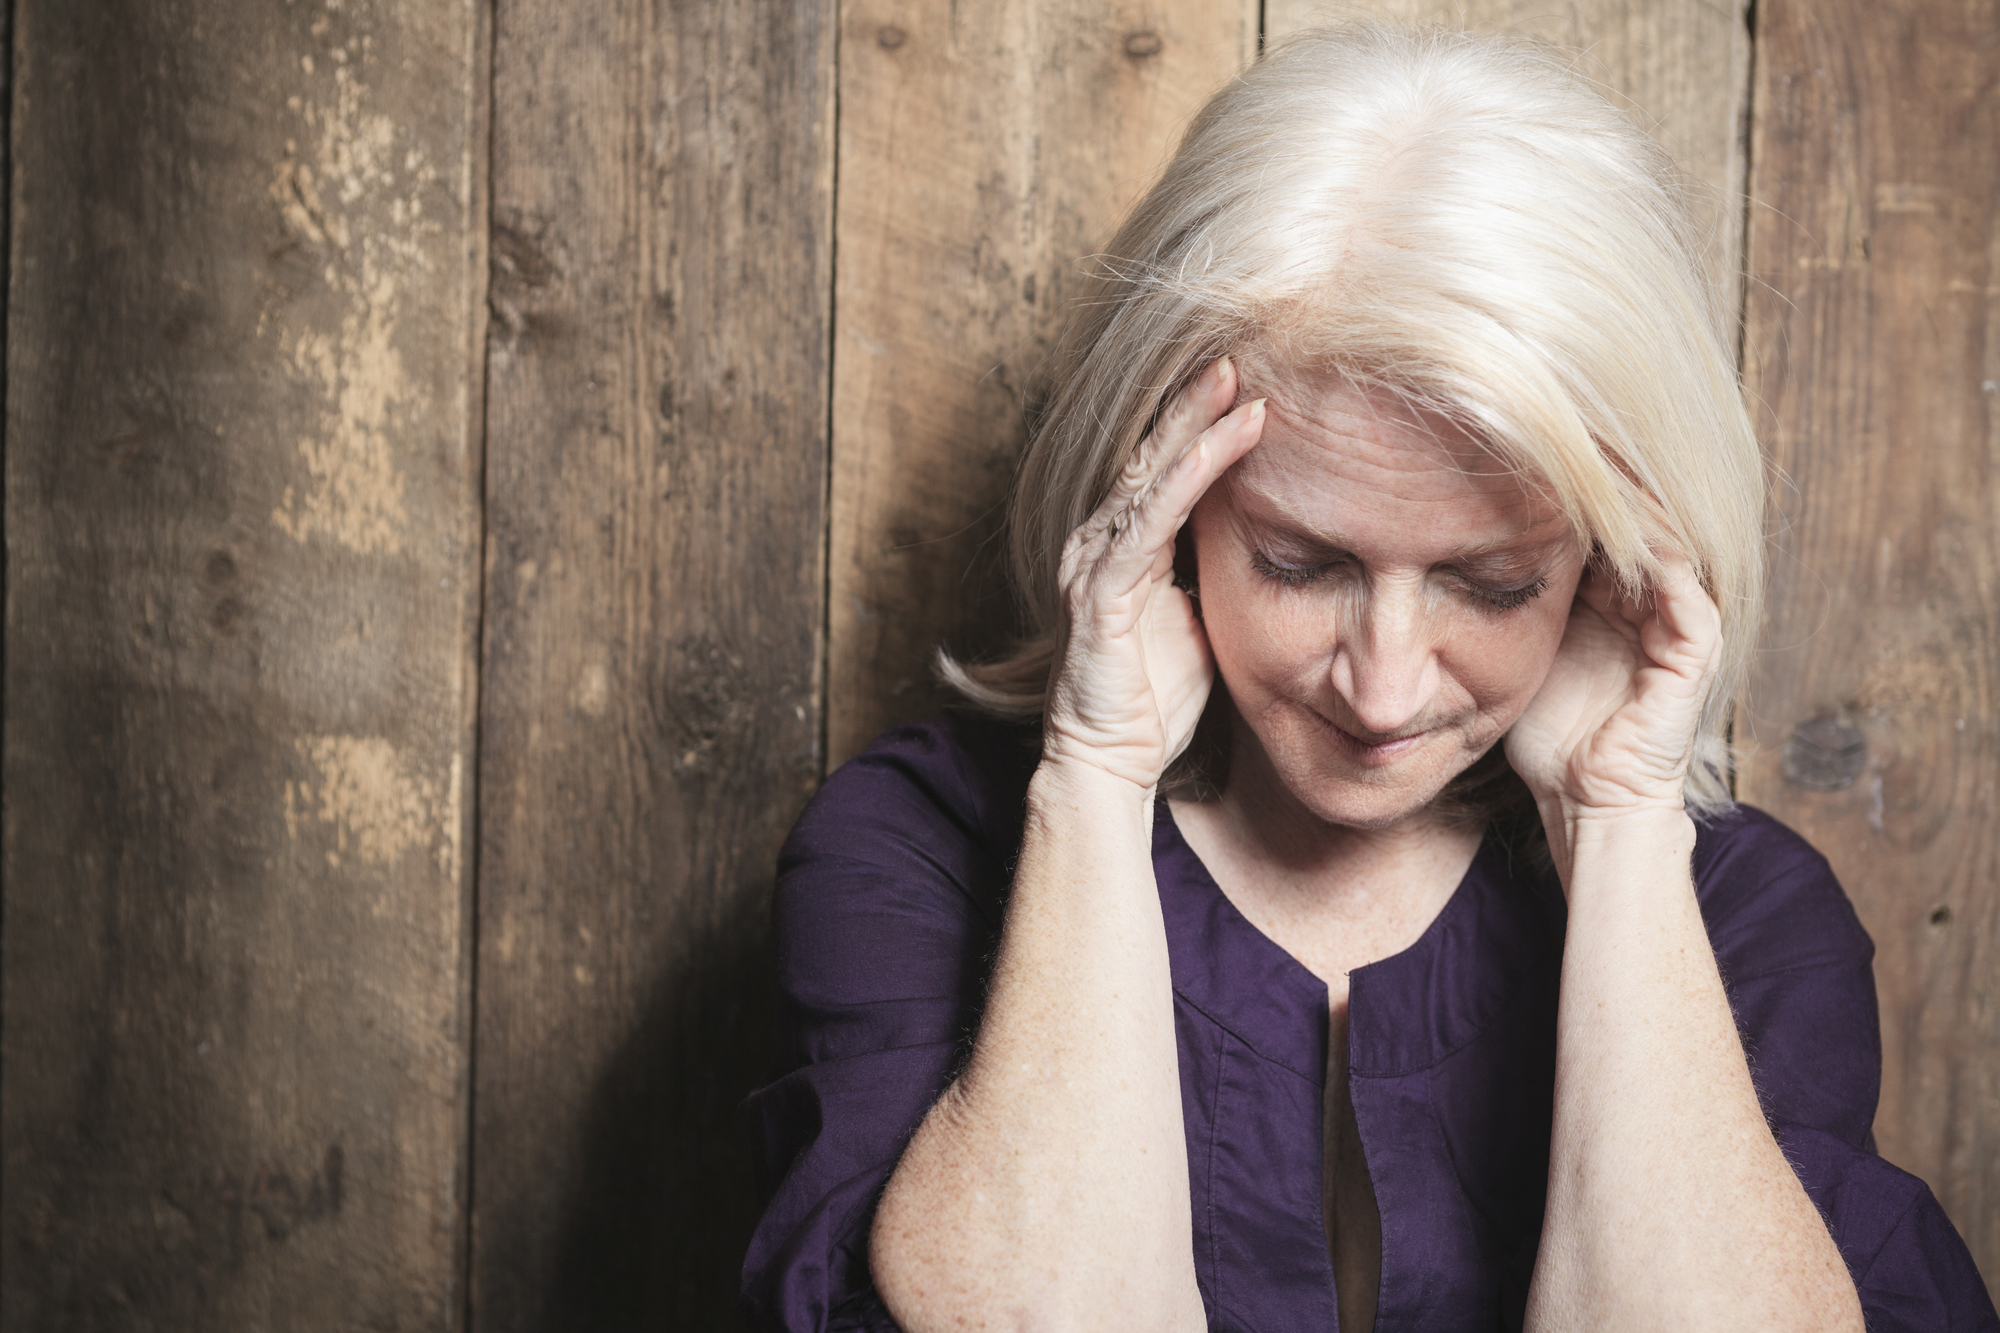 Senior person suffering menopause symptoms